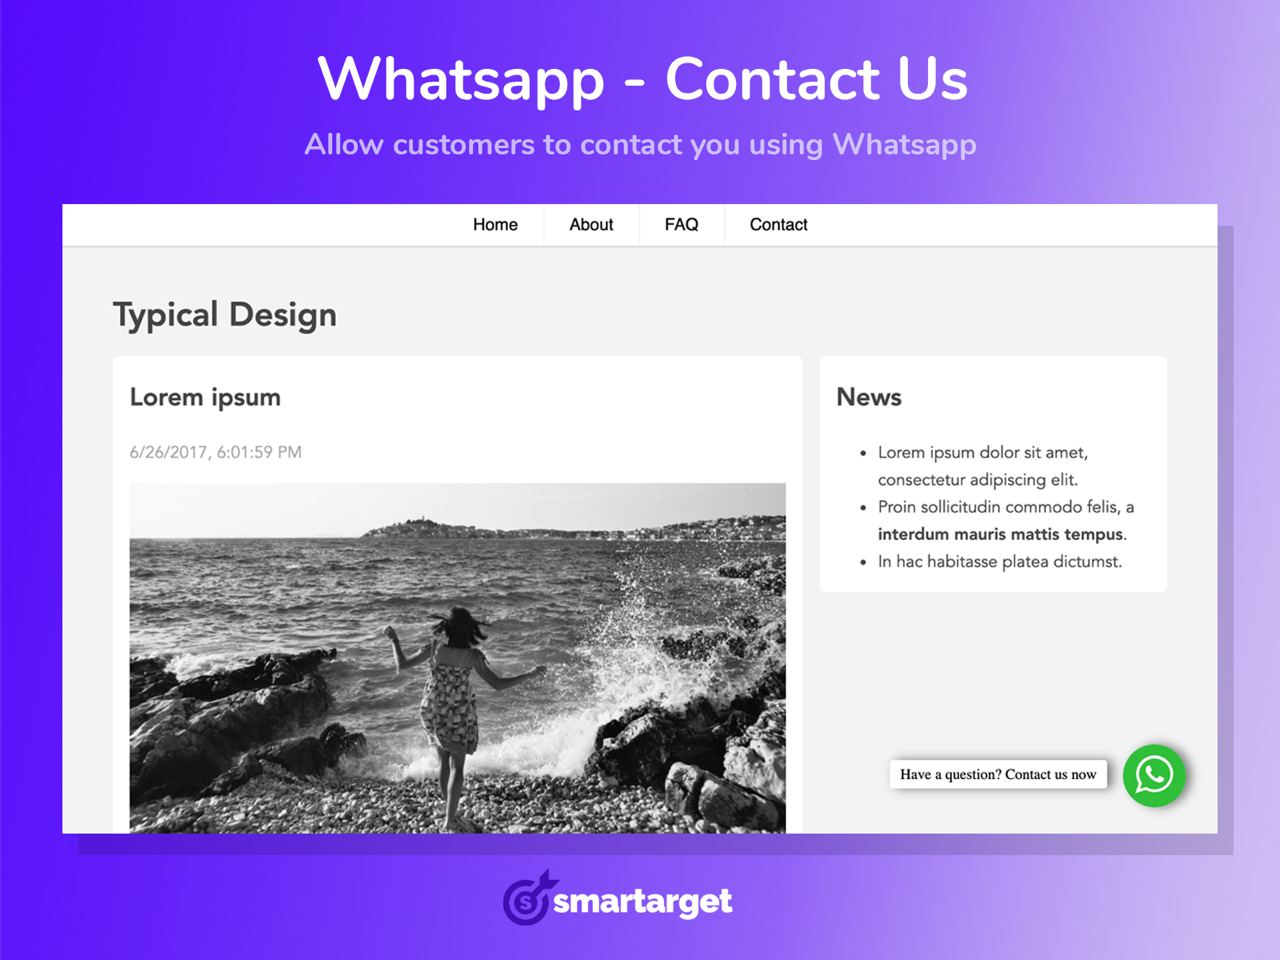 Smartarget WhatsApp - Contact Us Image